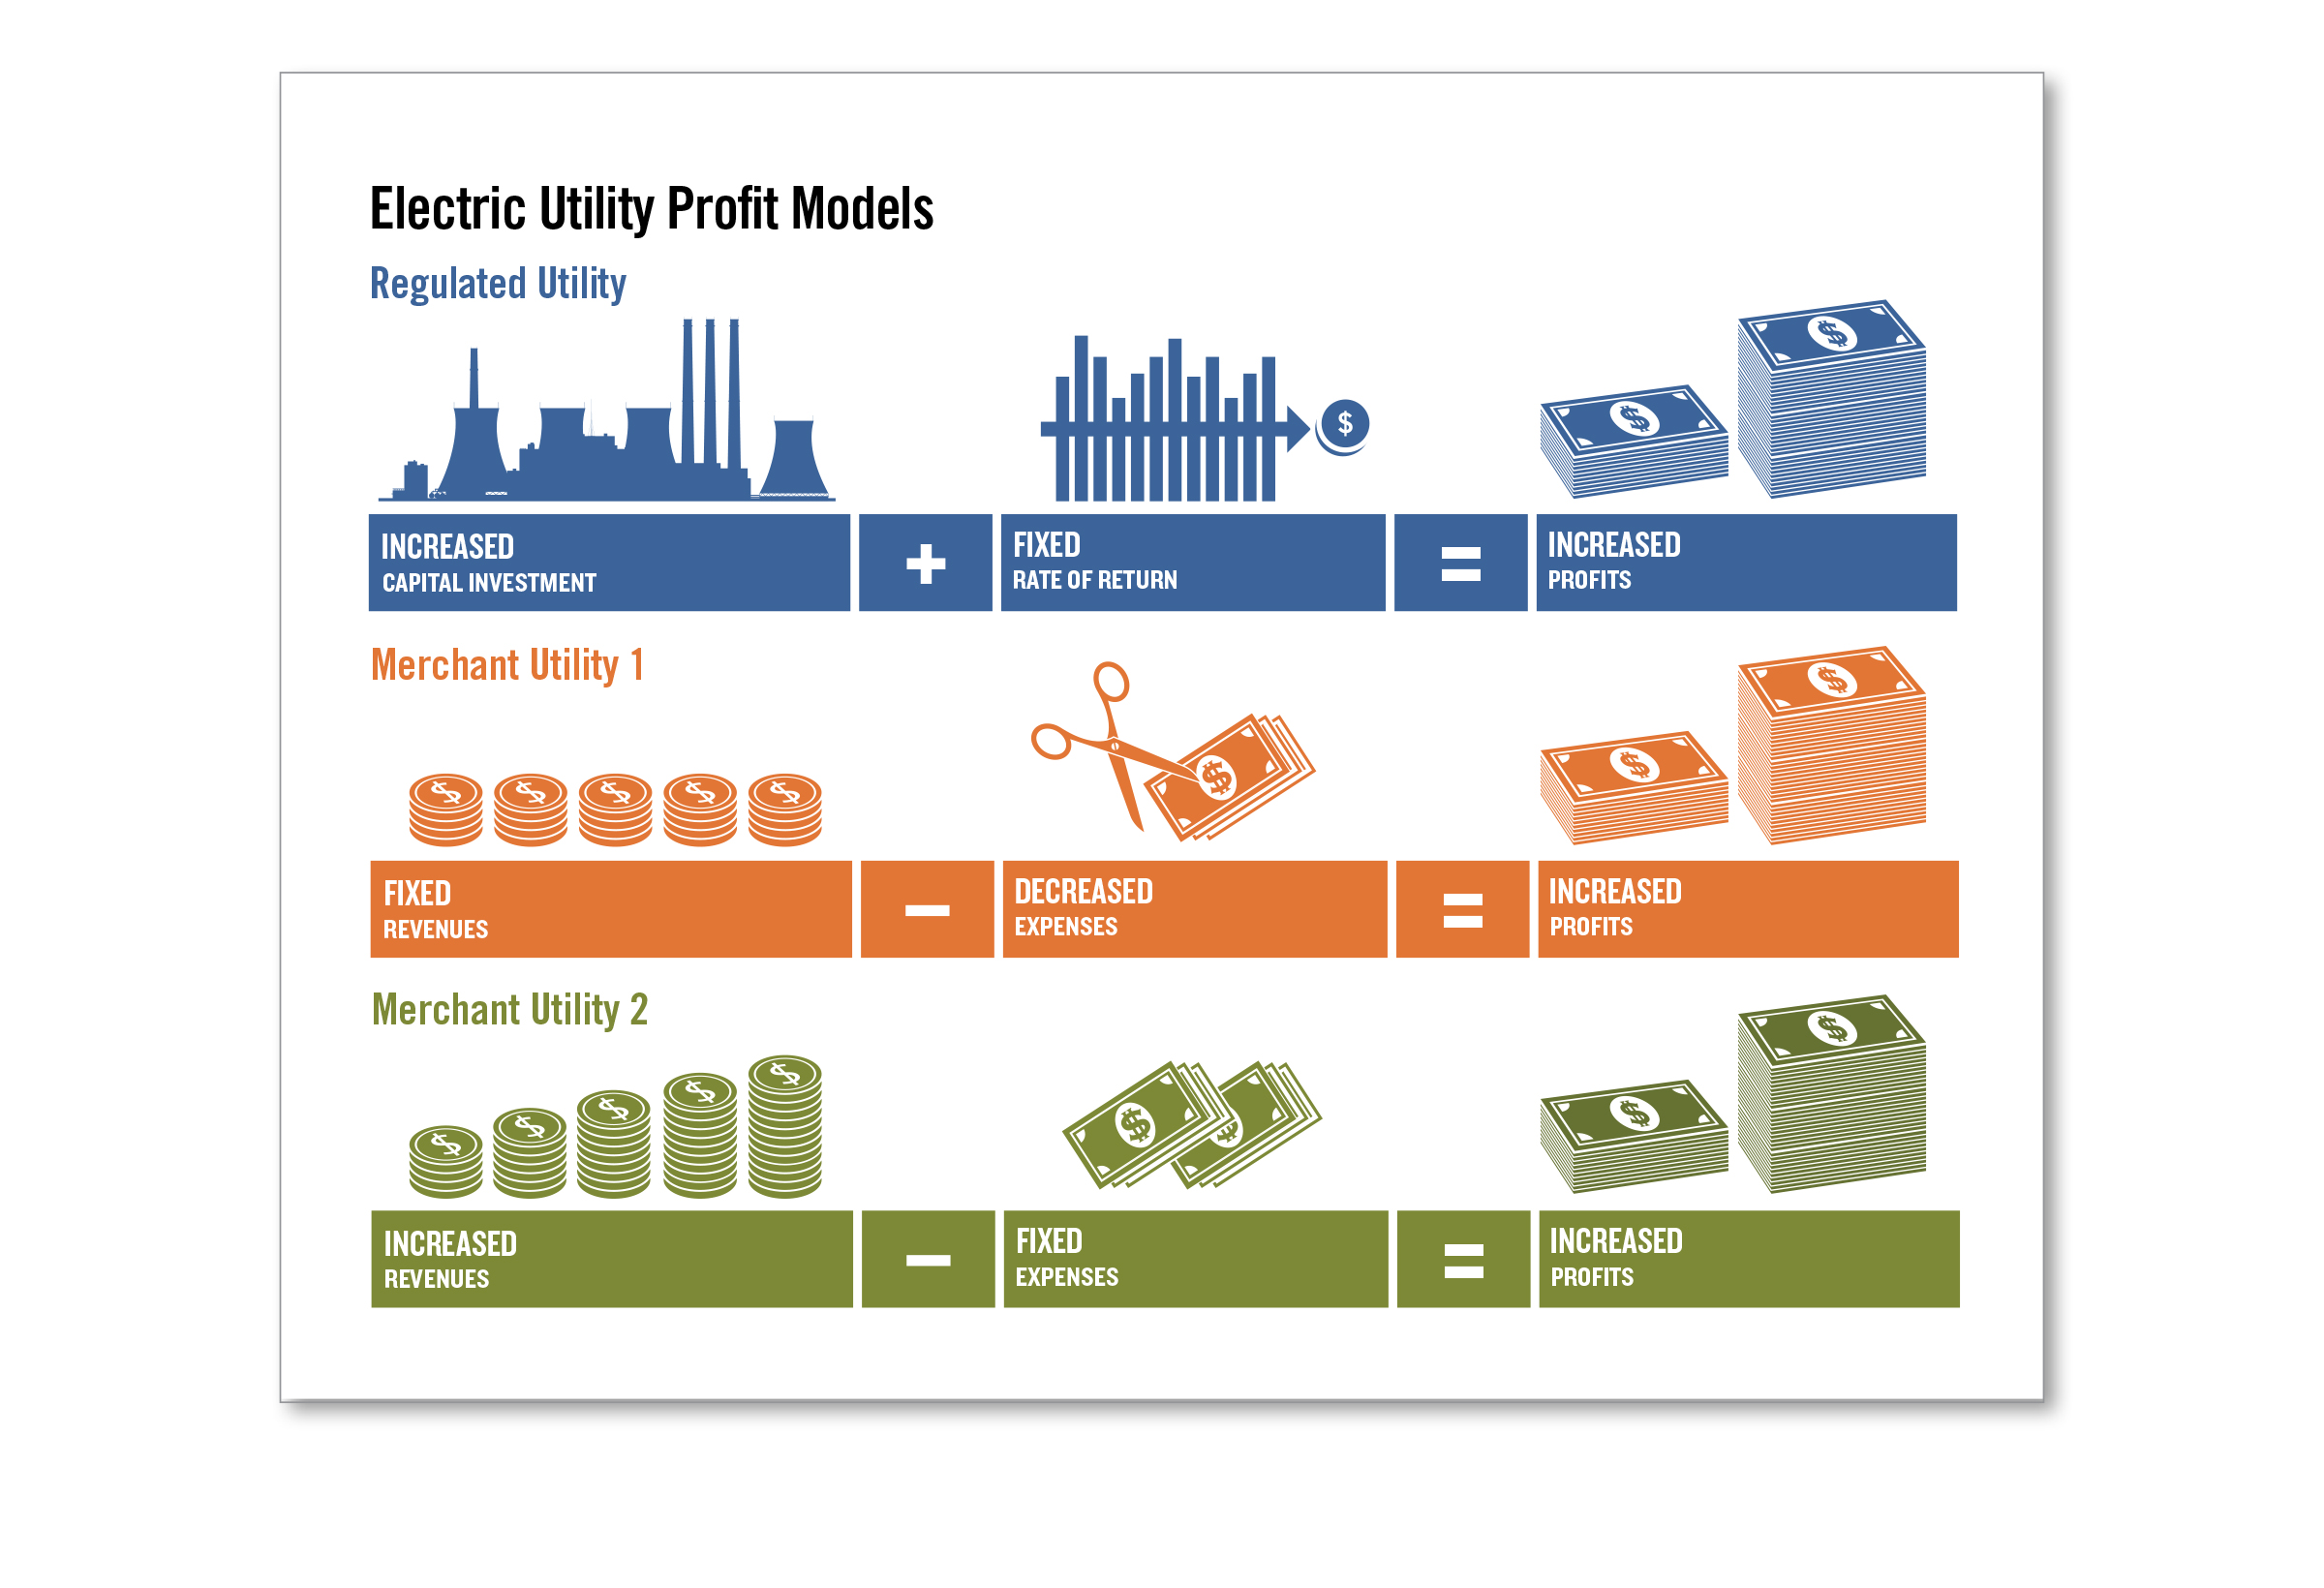  Electric Utility Profit Models 